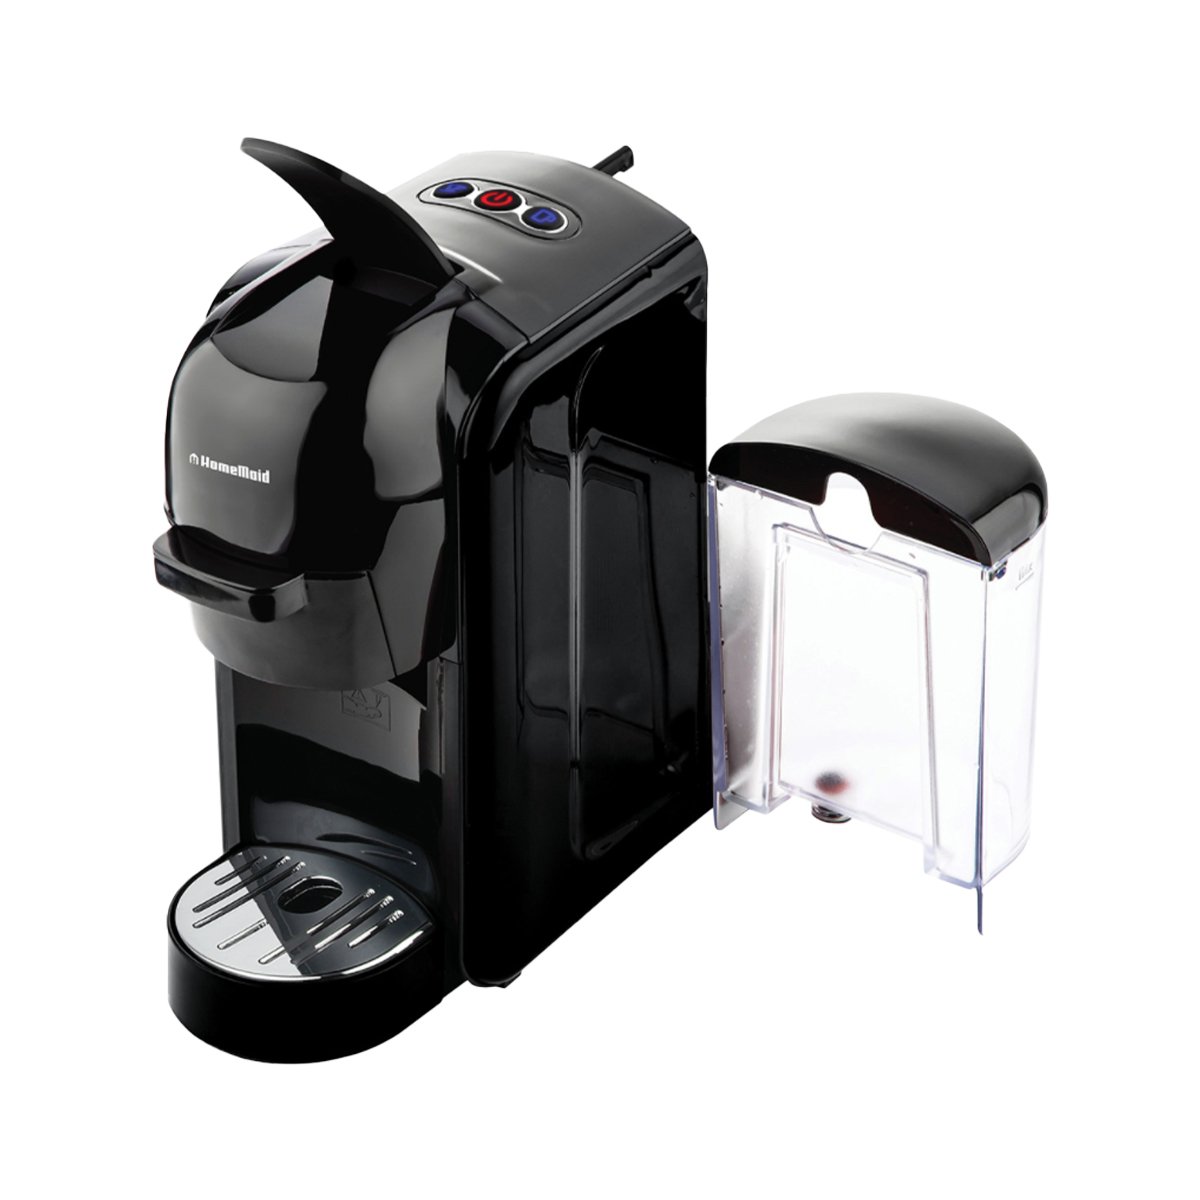 Homemaid 3-in-1 Cm511hm Coffee Multi Capsule Pod Machine - 0